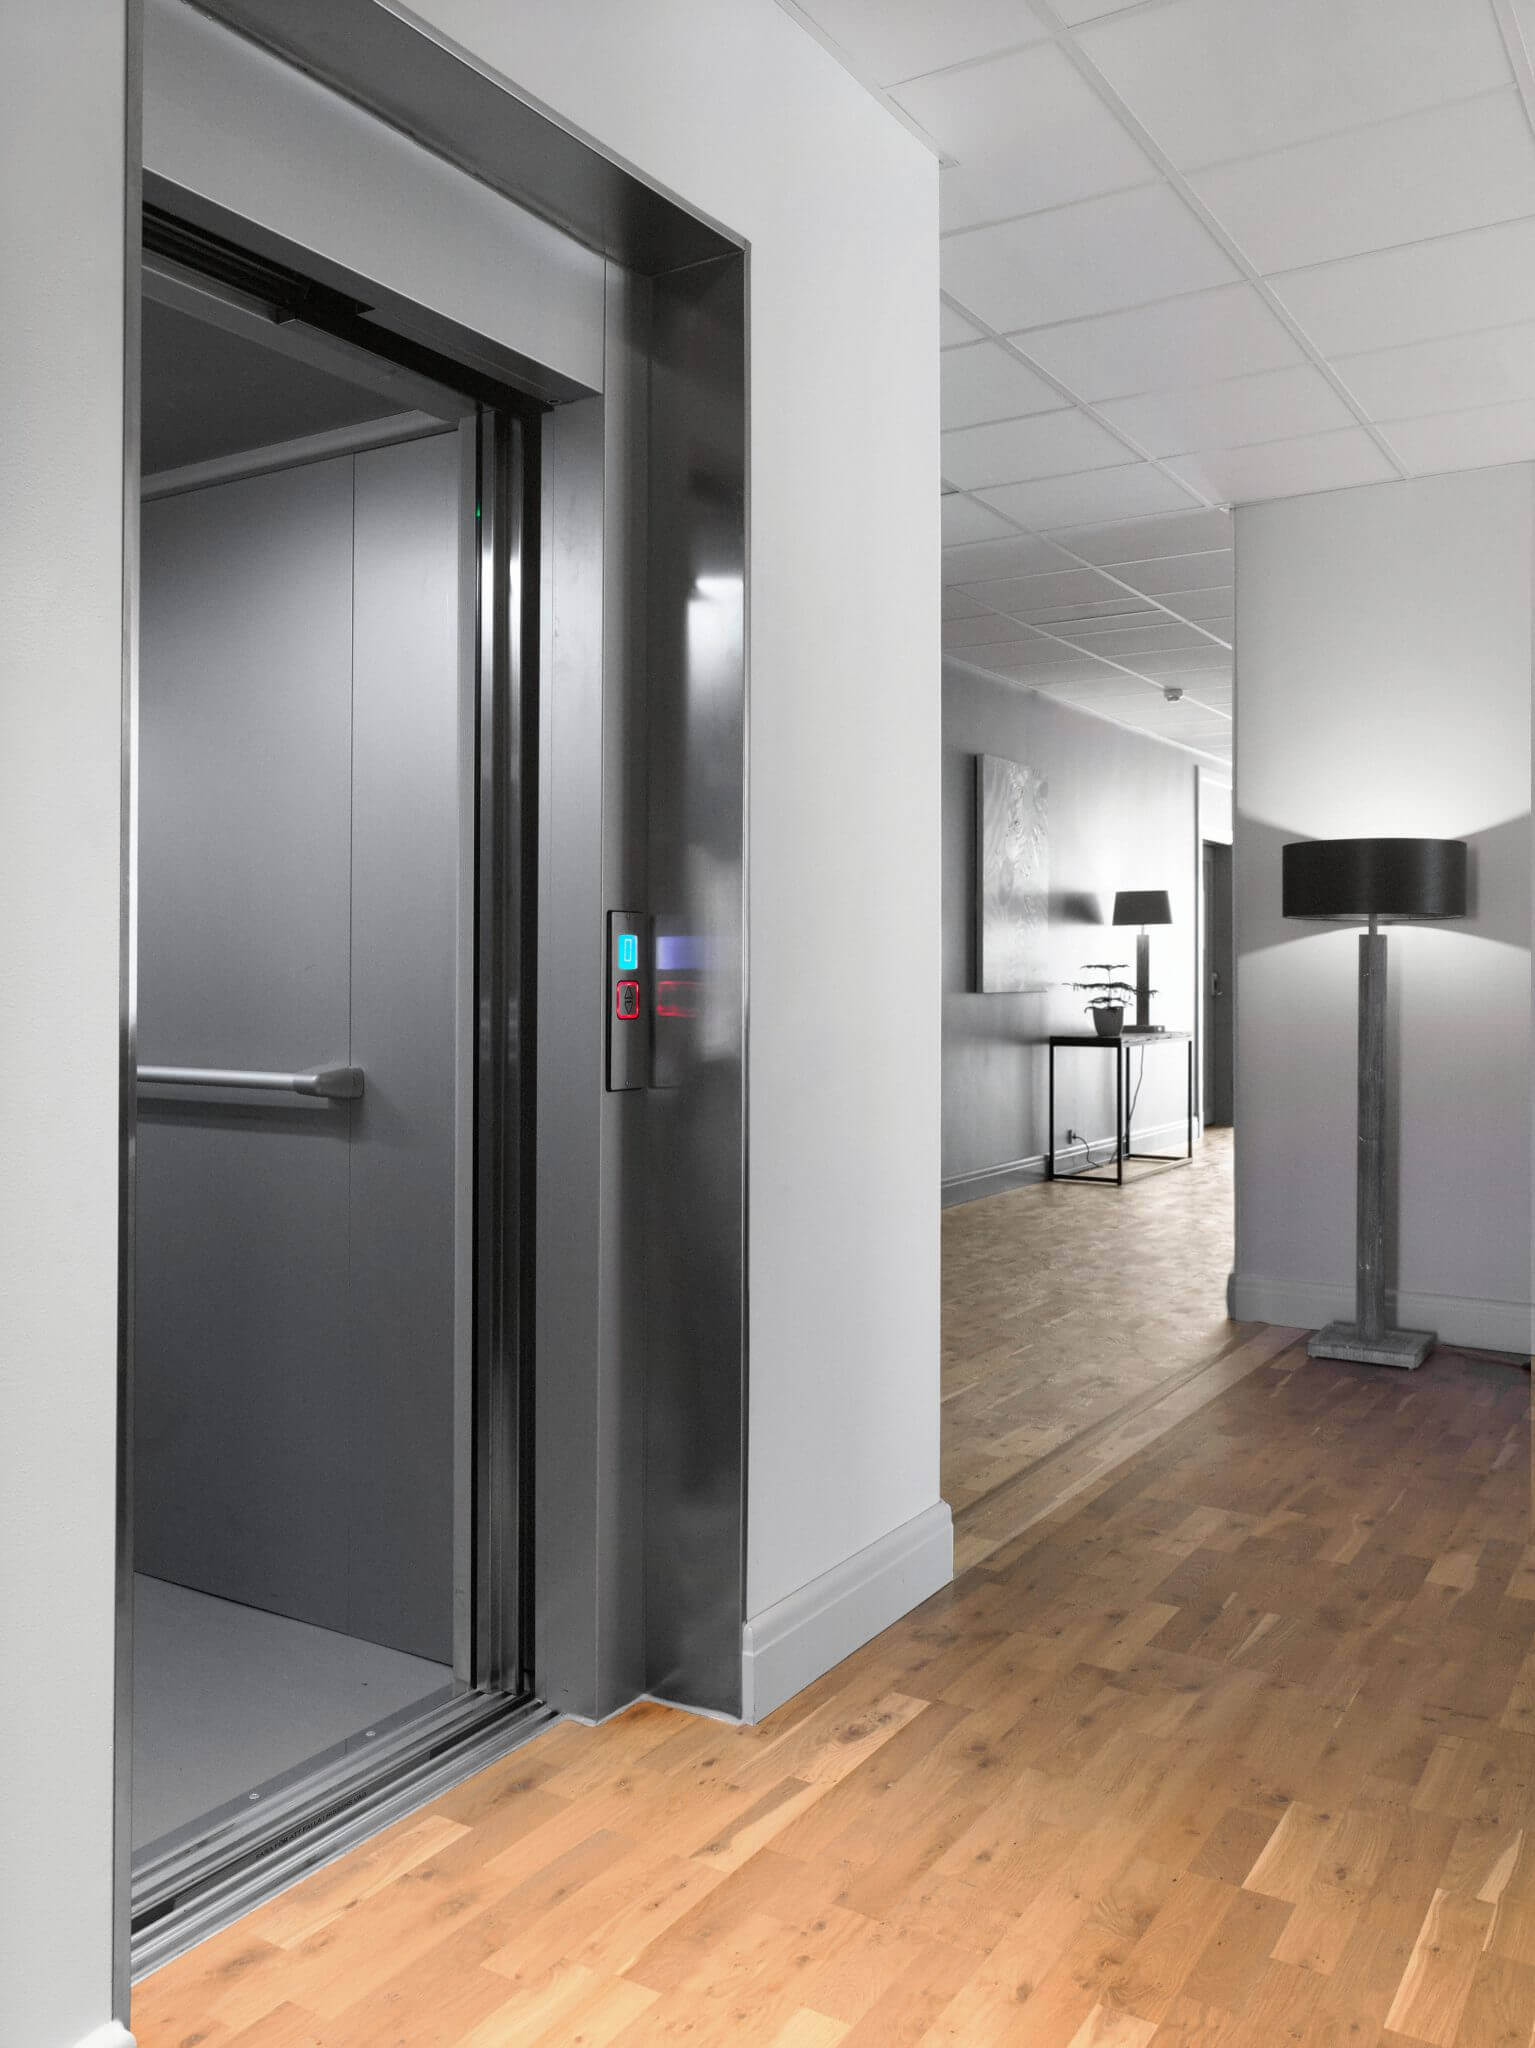 Aritco has elevators for hospitals and nursing homes